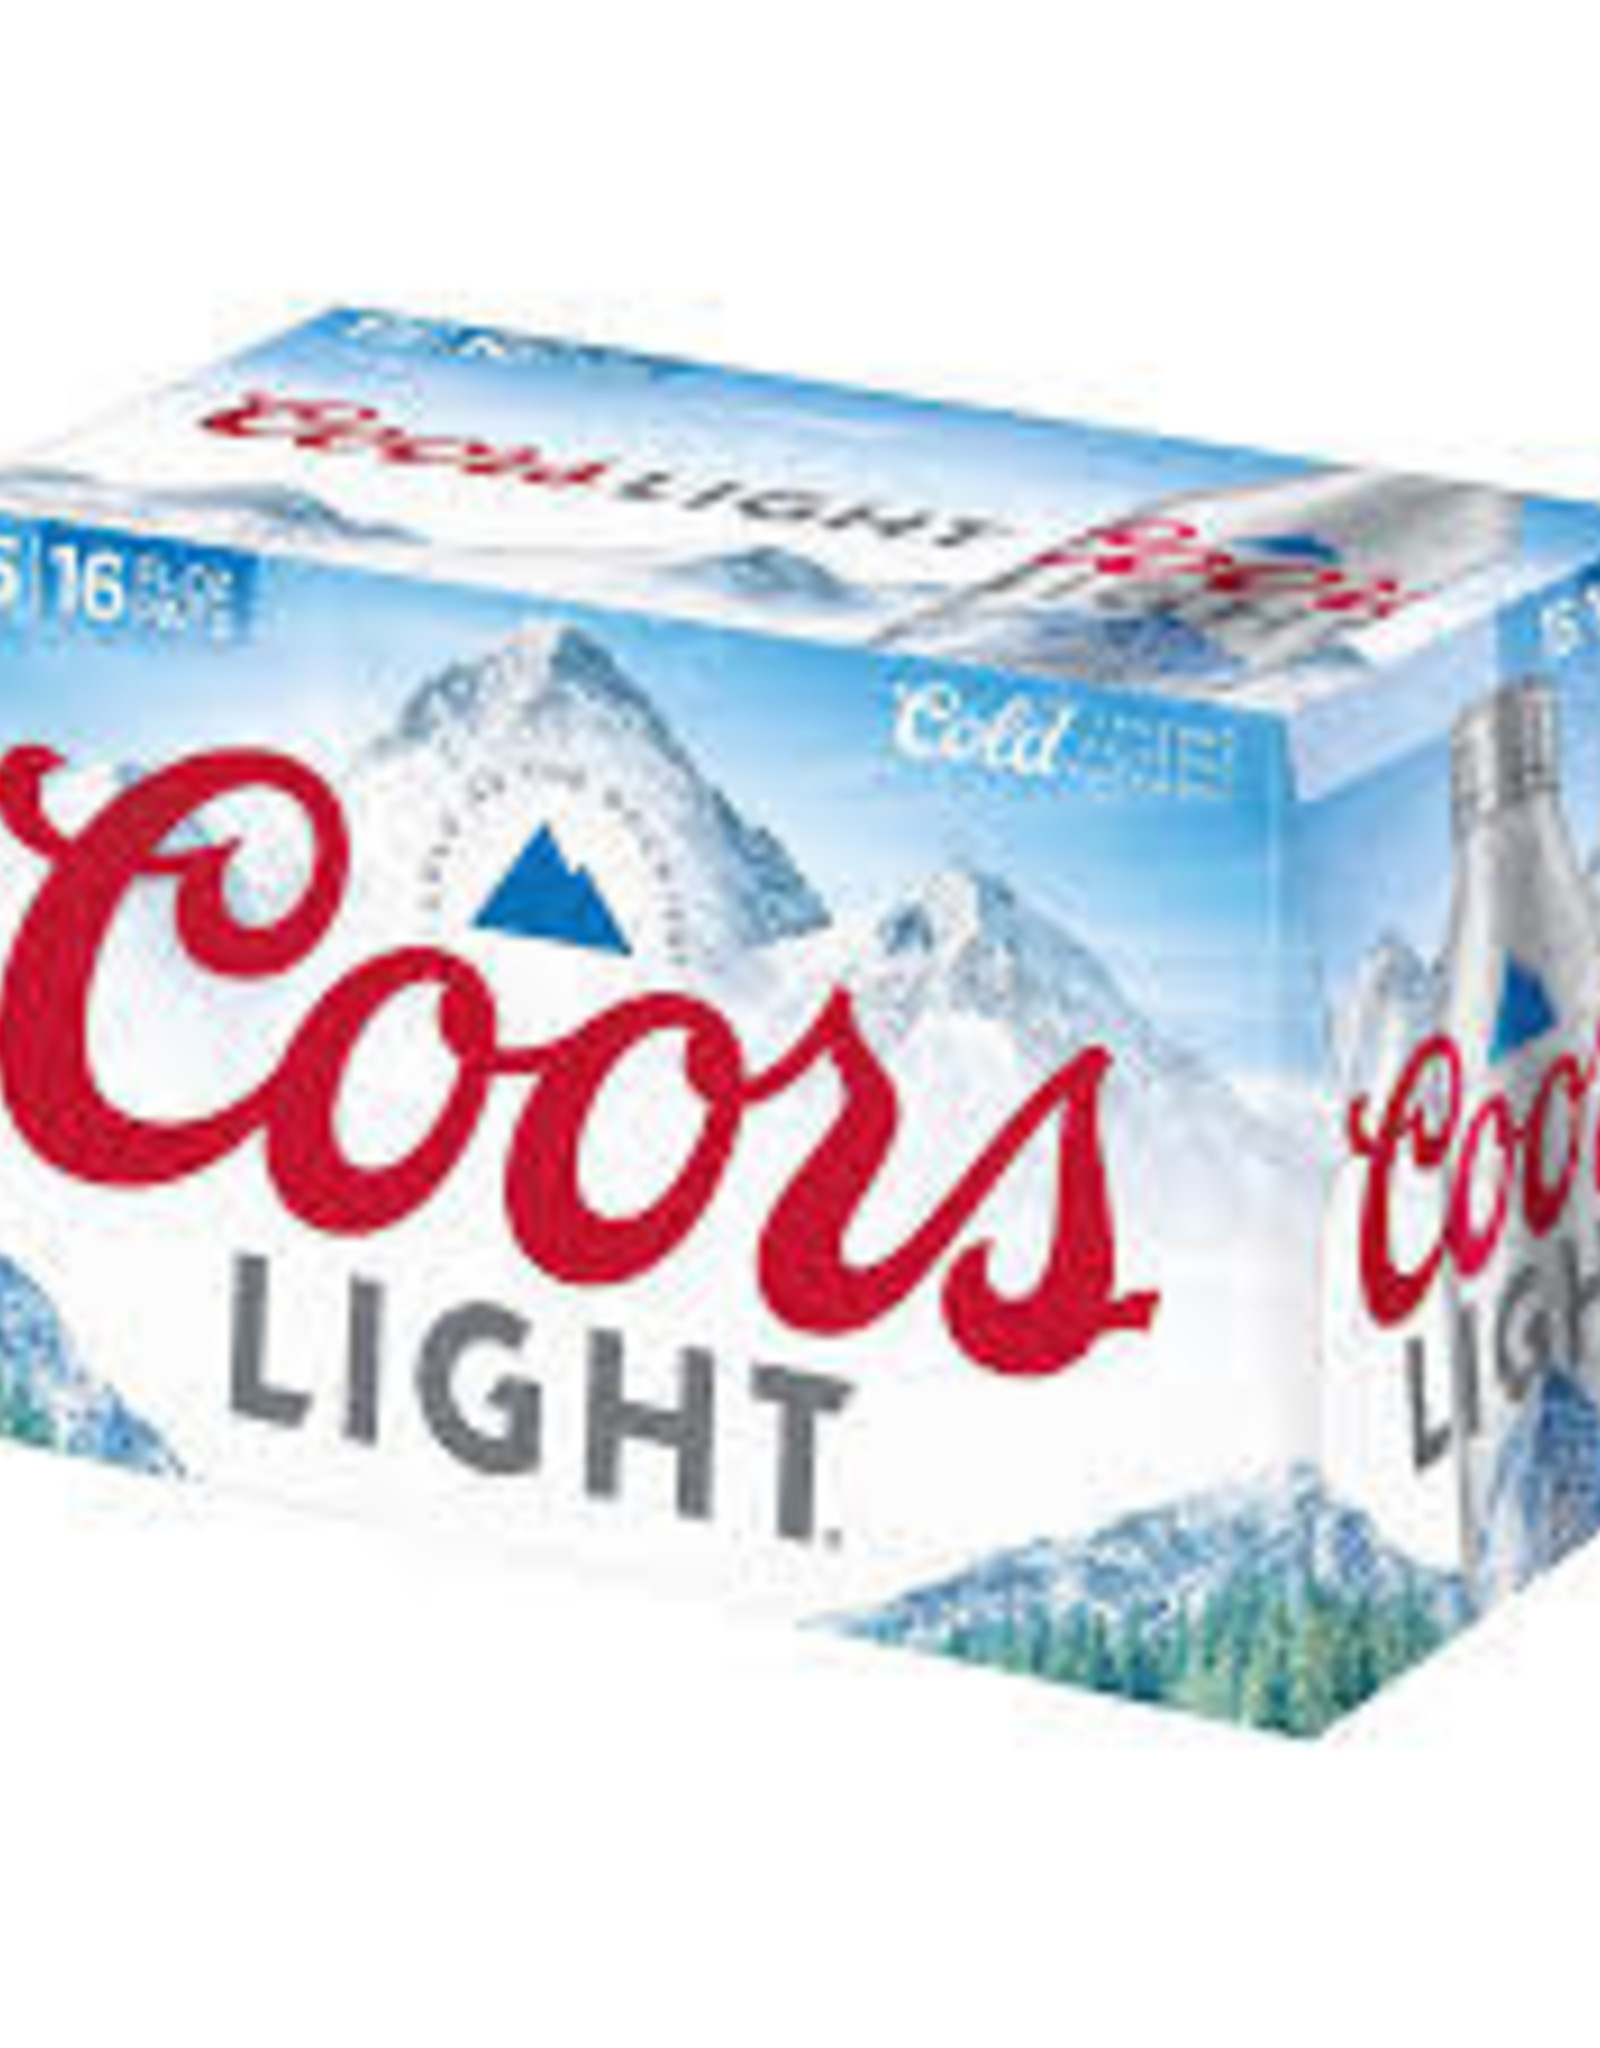 Coors COORS LIGHT - 15PK - ALUMINUM - CANS